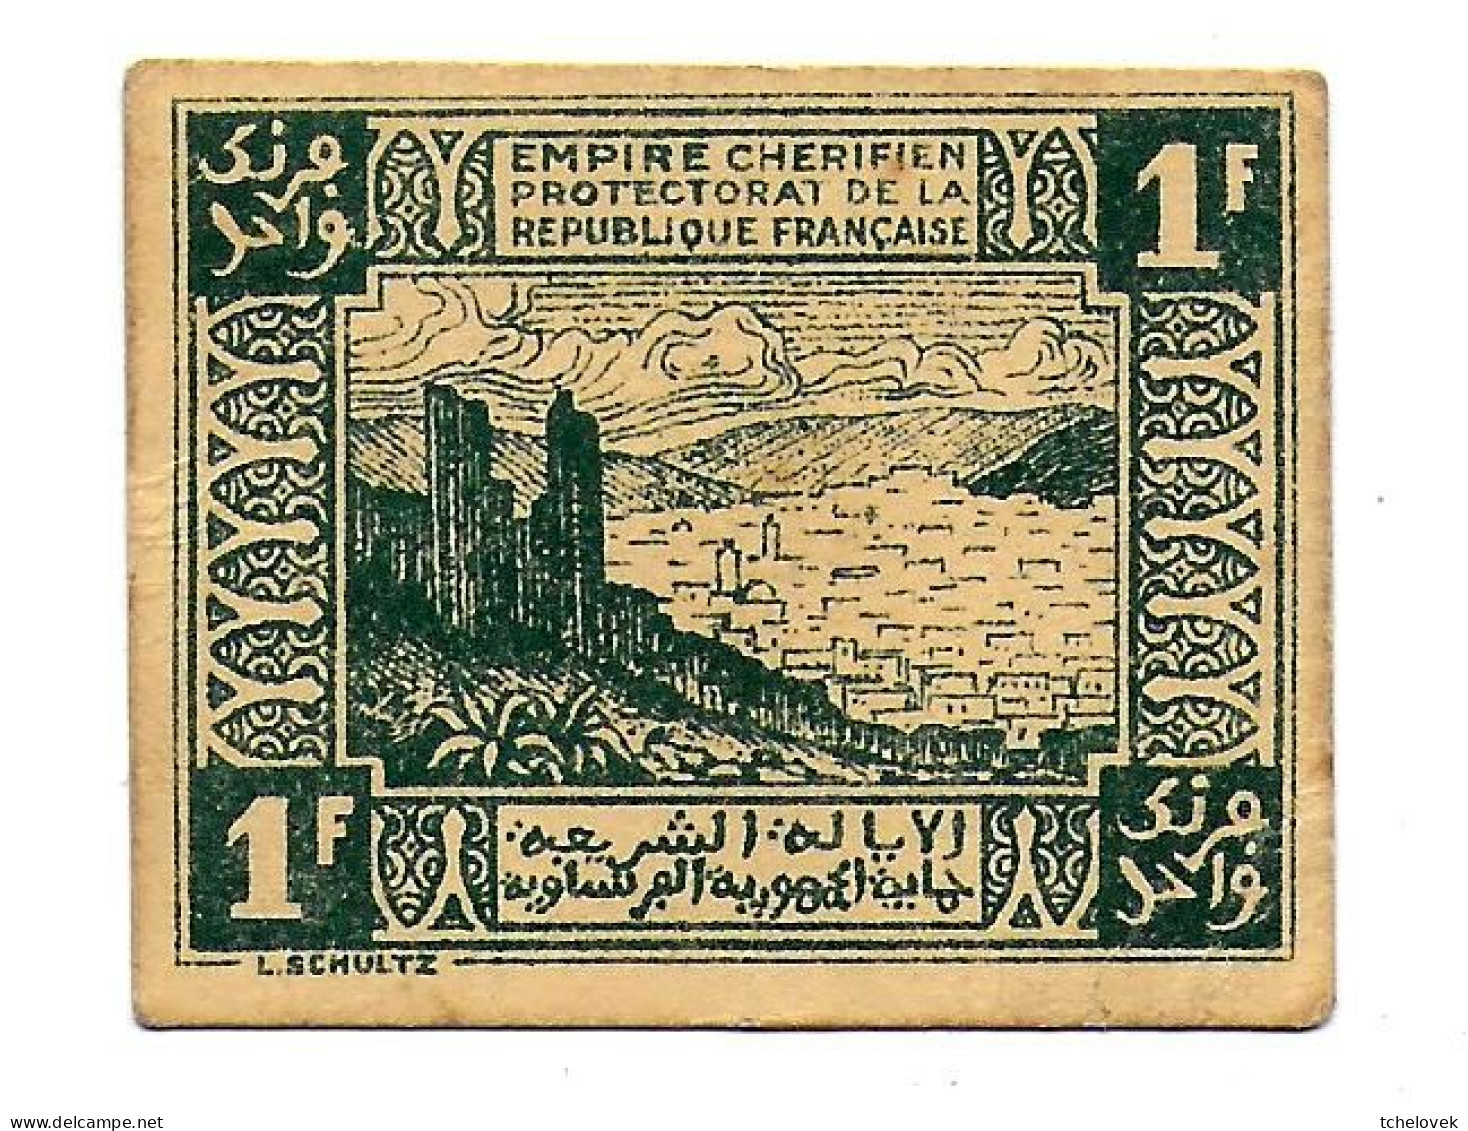 (Billets). Maroc. Morocco. 1 Fr 06.04.1944. P 42 Rare+ - Marruecos